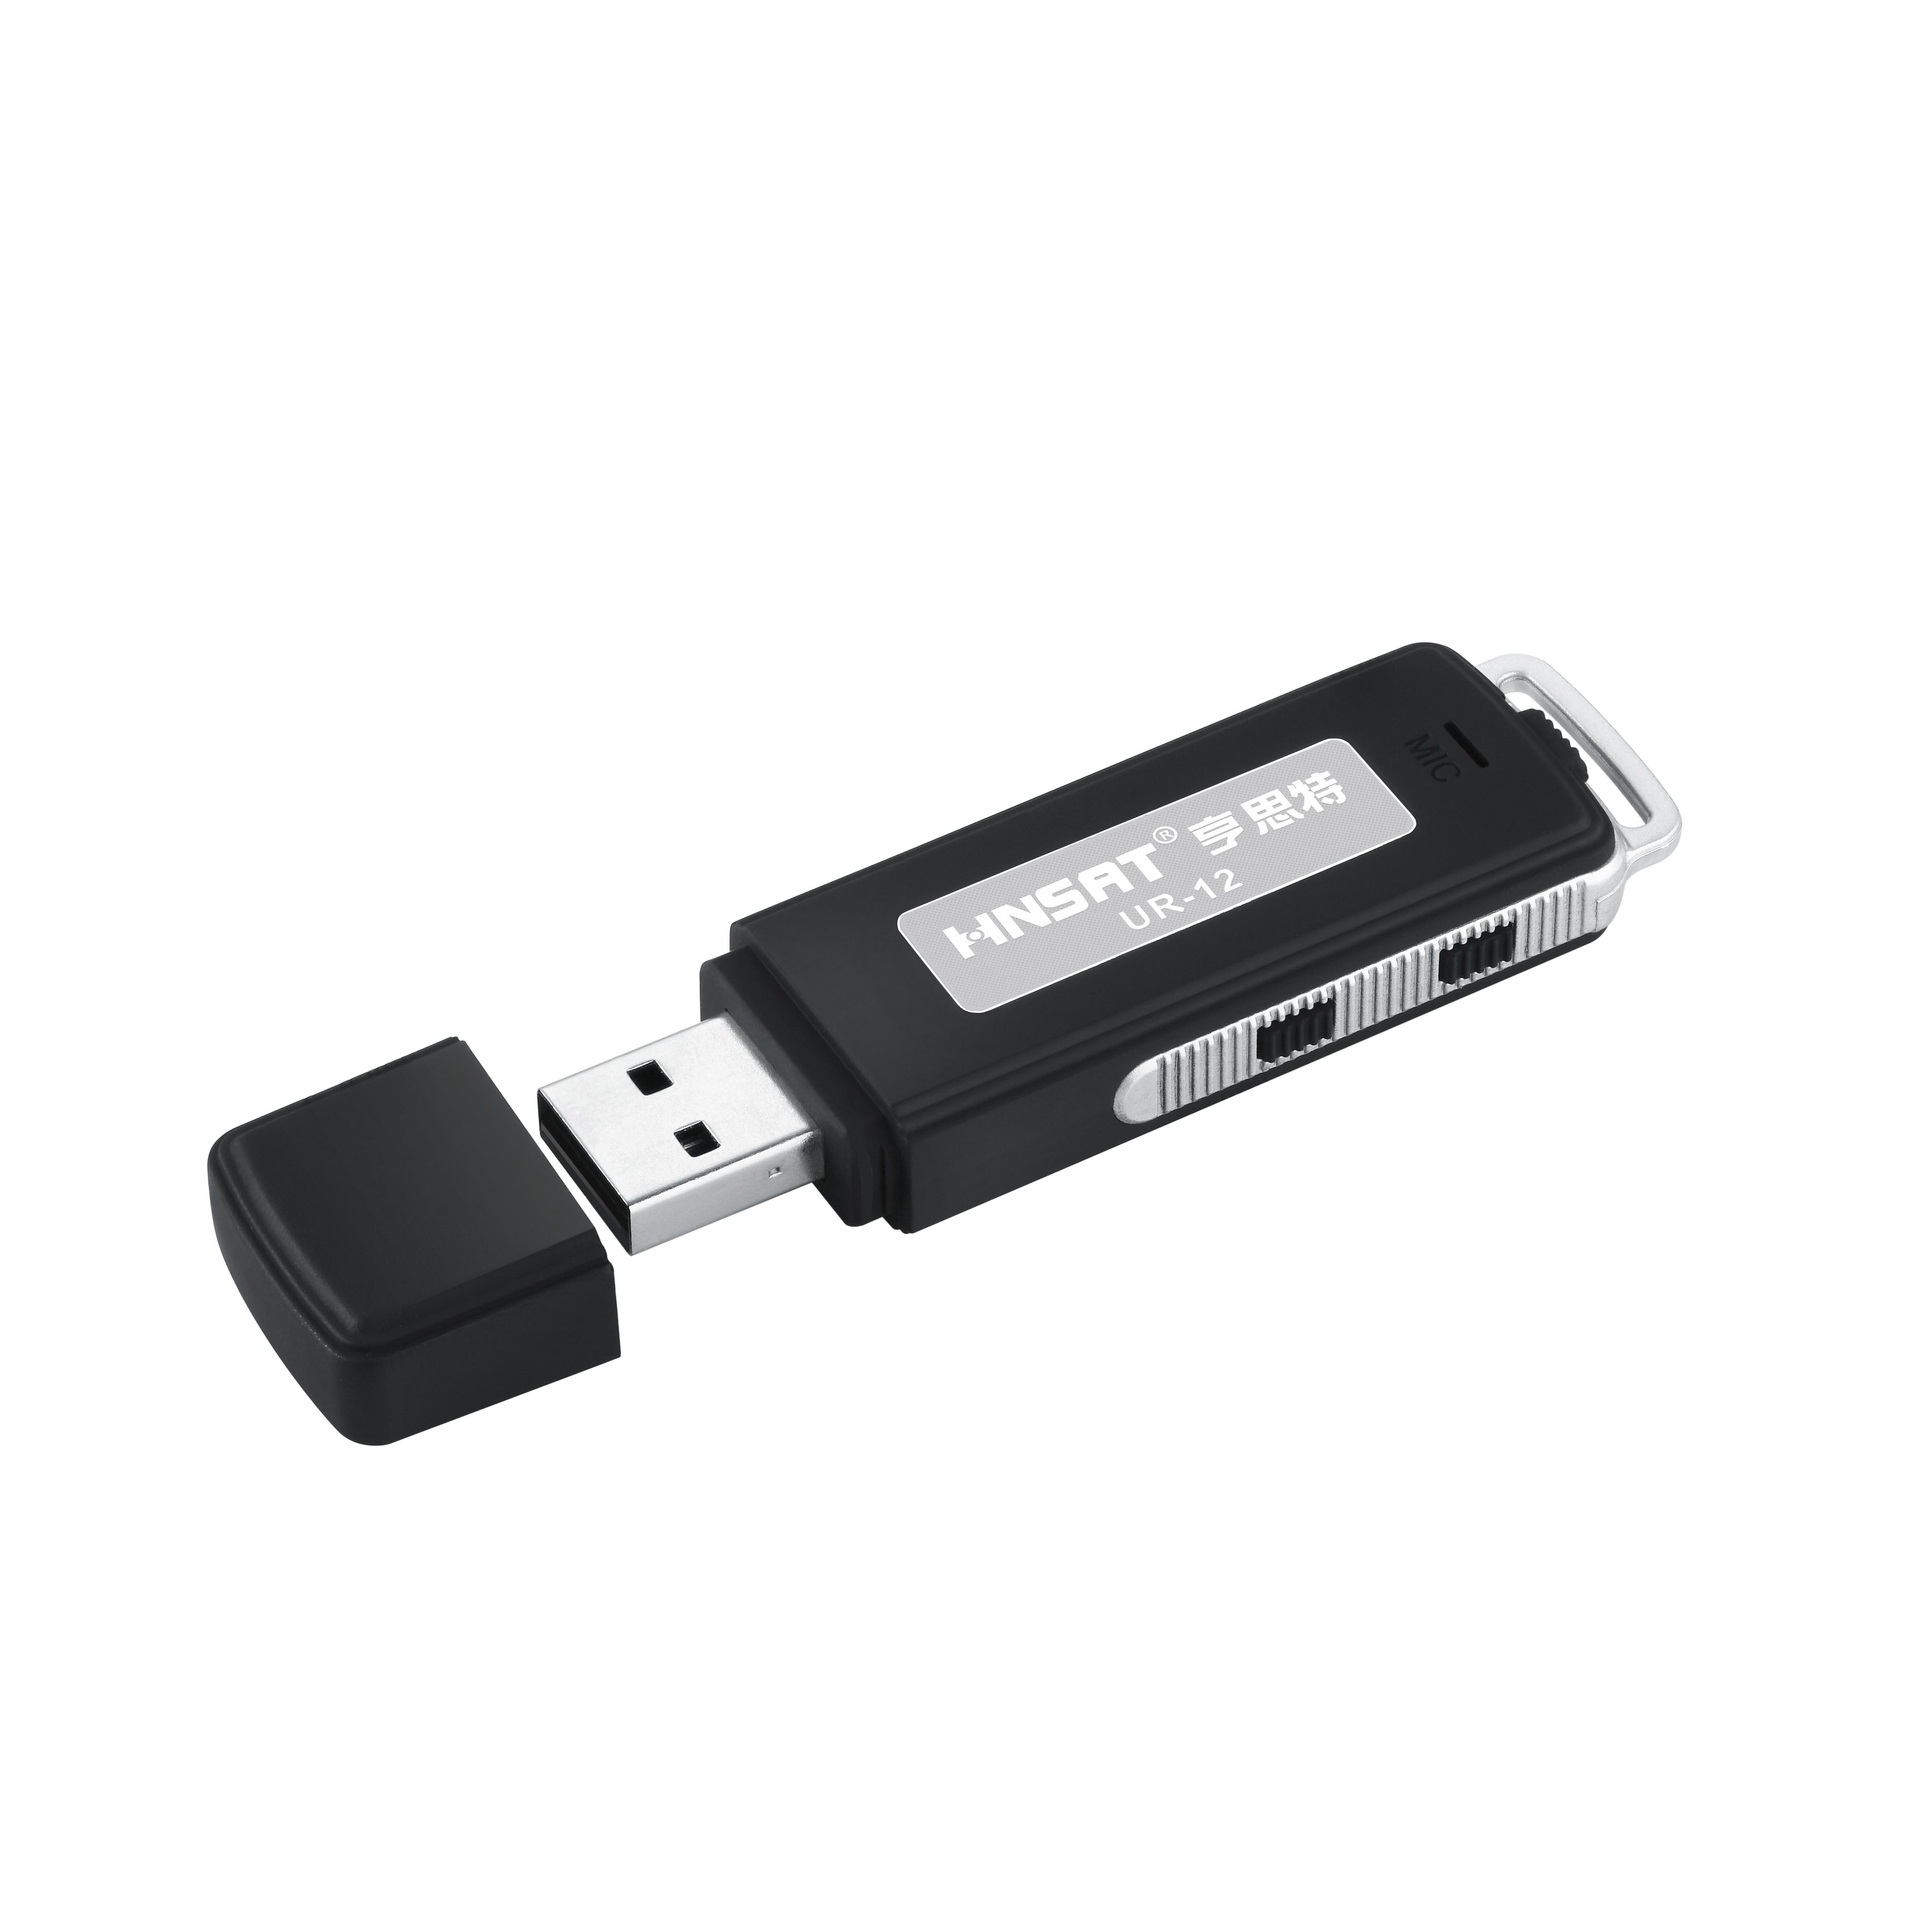 product-Hnsat-Portable Stylish USB Pendrive Voice Recorder MP3 Recording Device Headphone-img